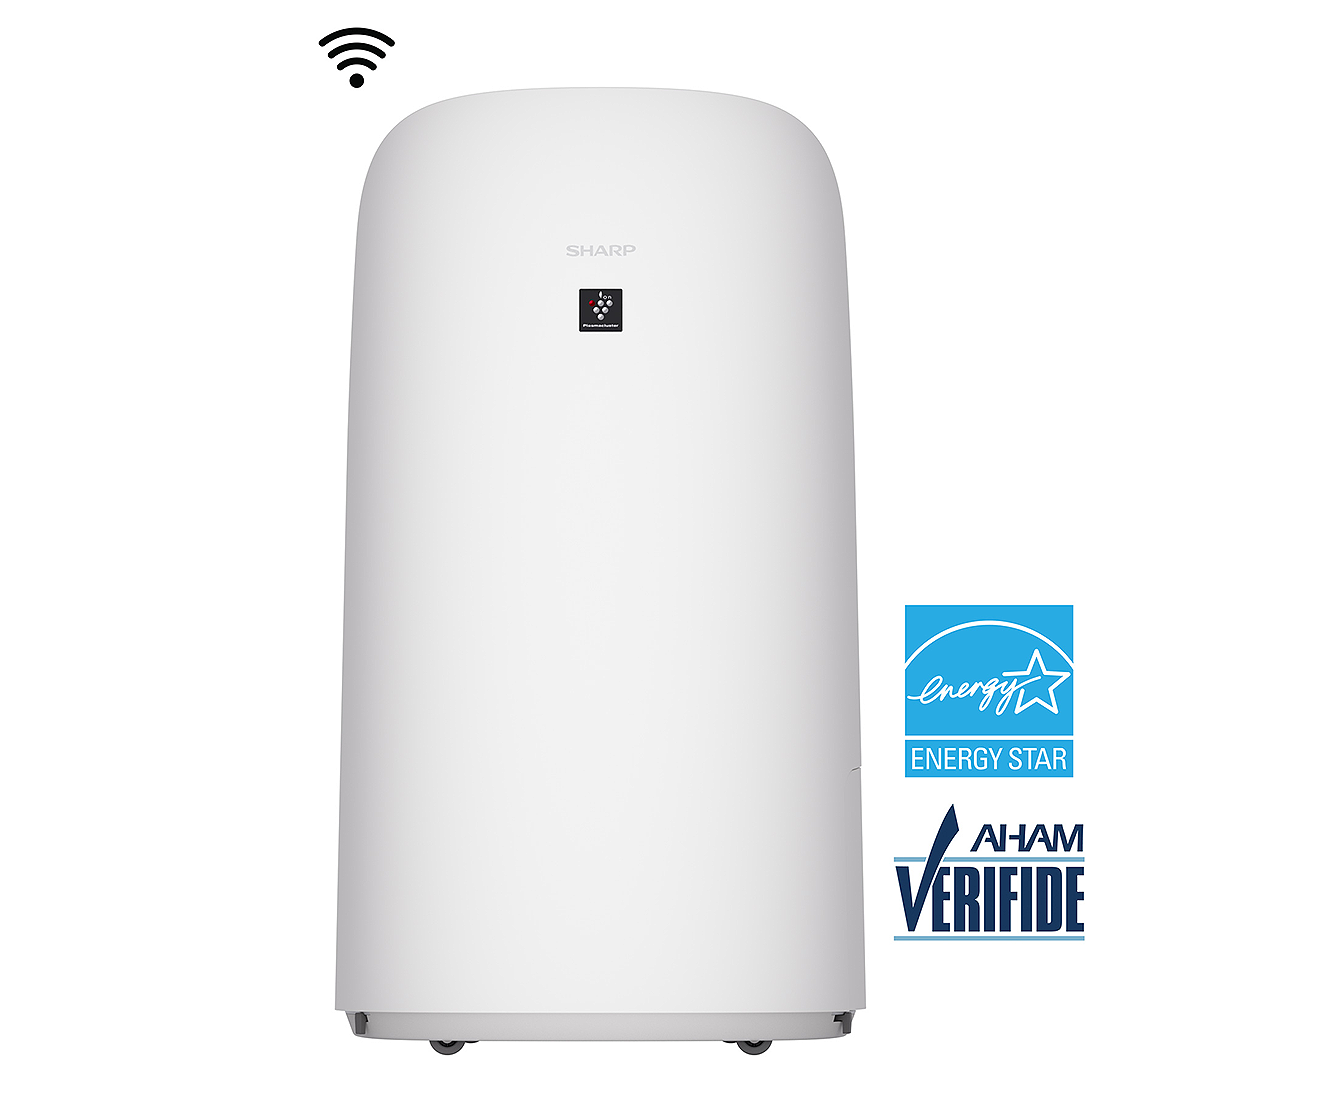 KCP110CW air purifier with wifi, Energy Star, and AHAM Verifide logos